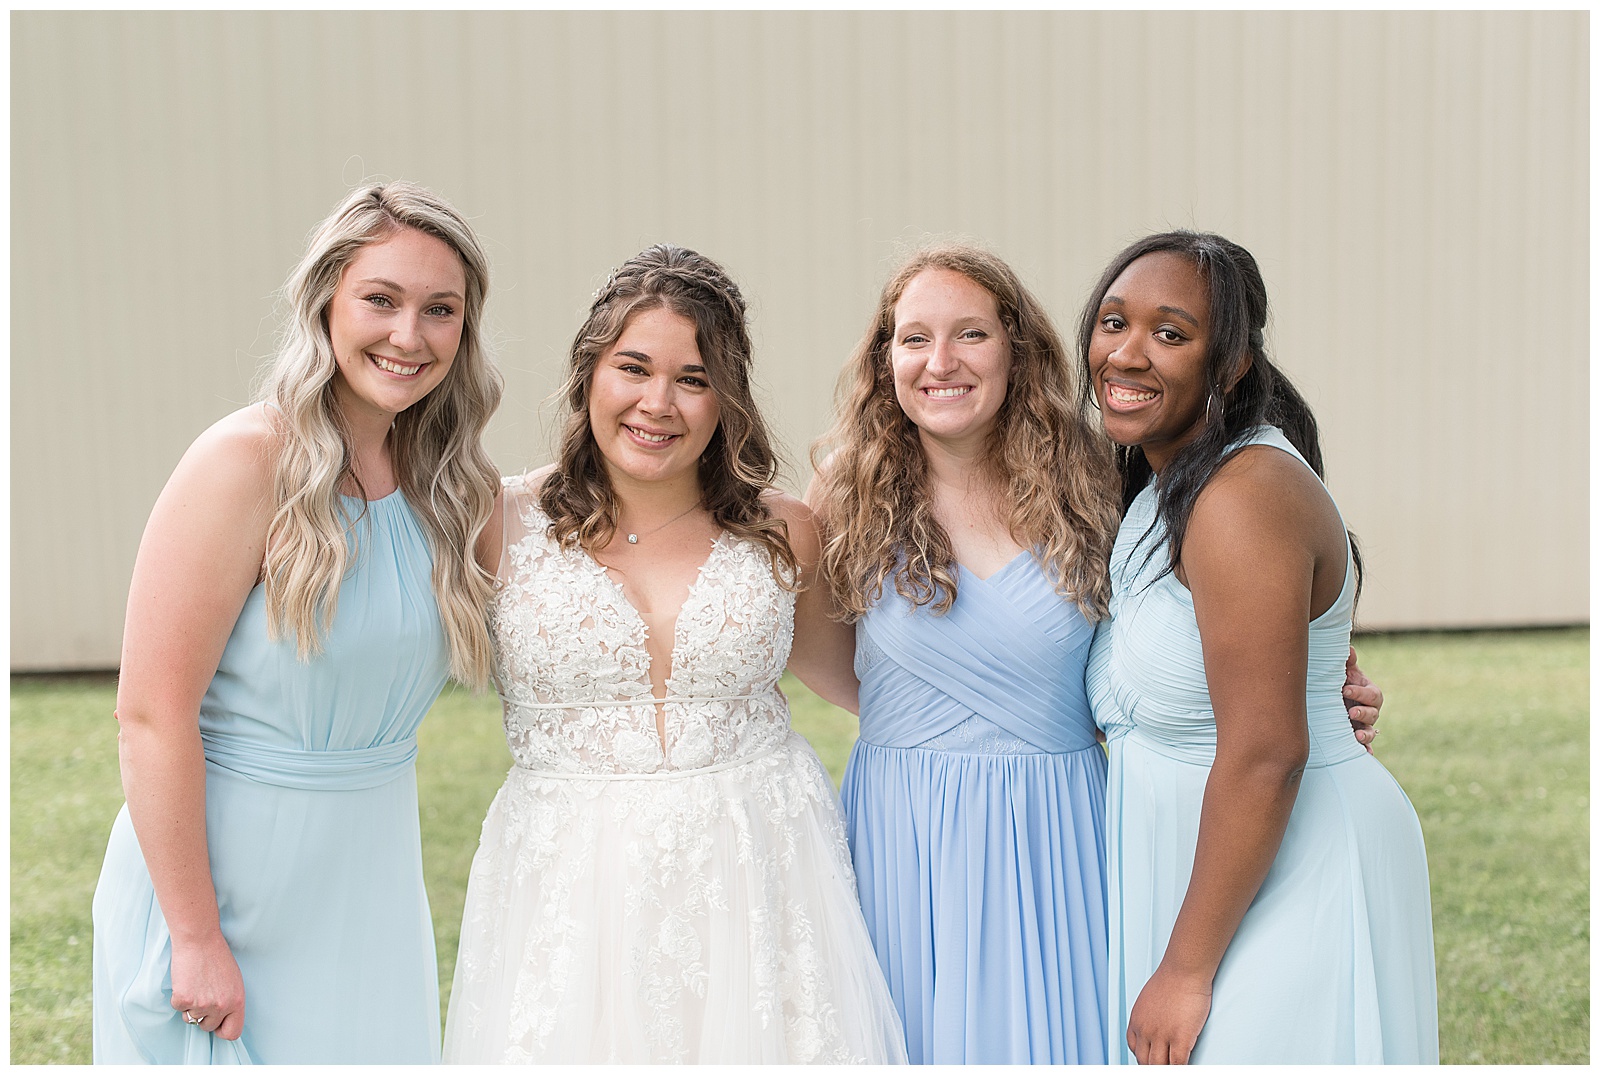 bridesmaids in shades of blue dresses smiling at camera